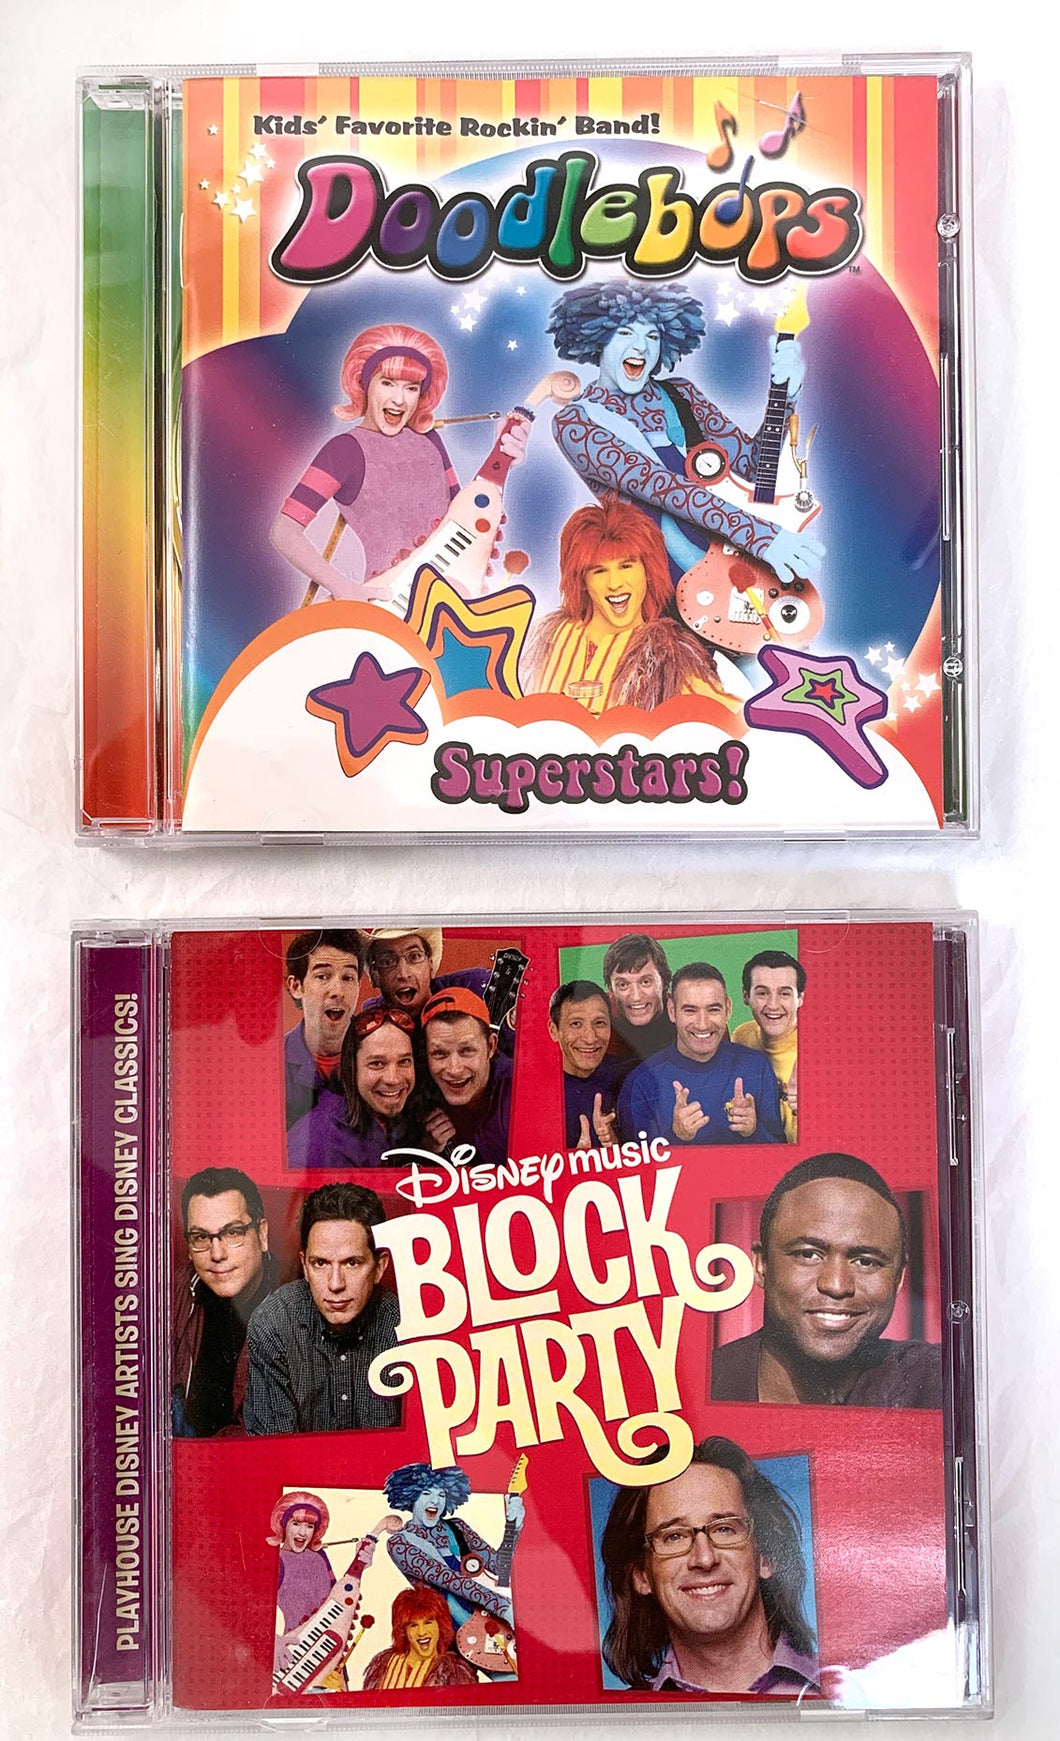 RARE ITEM!! Doodlebops Superstars CD (season two songs) & Disney Music Block Party CD